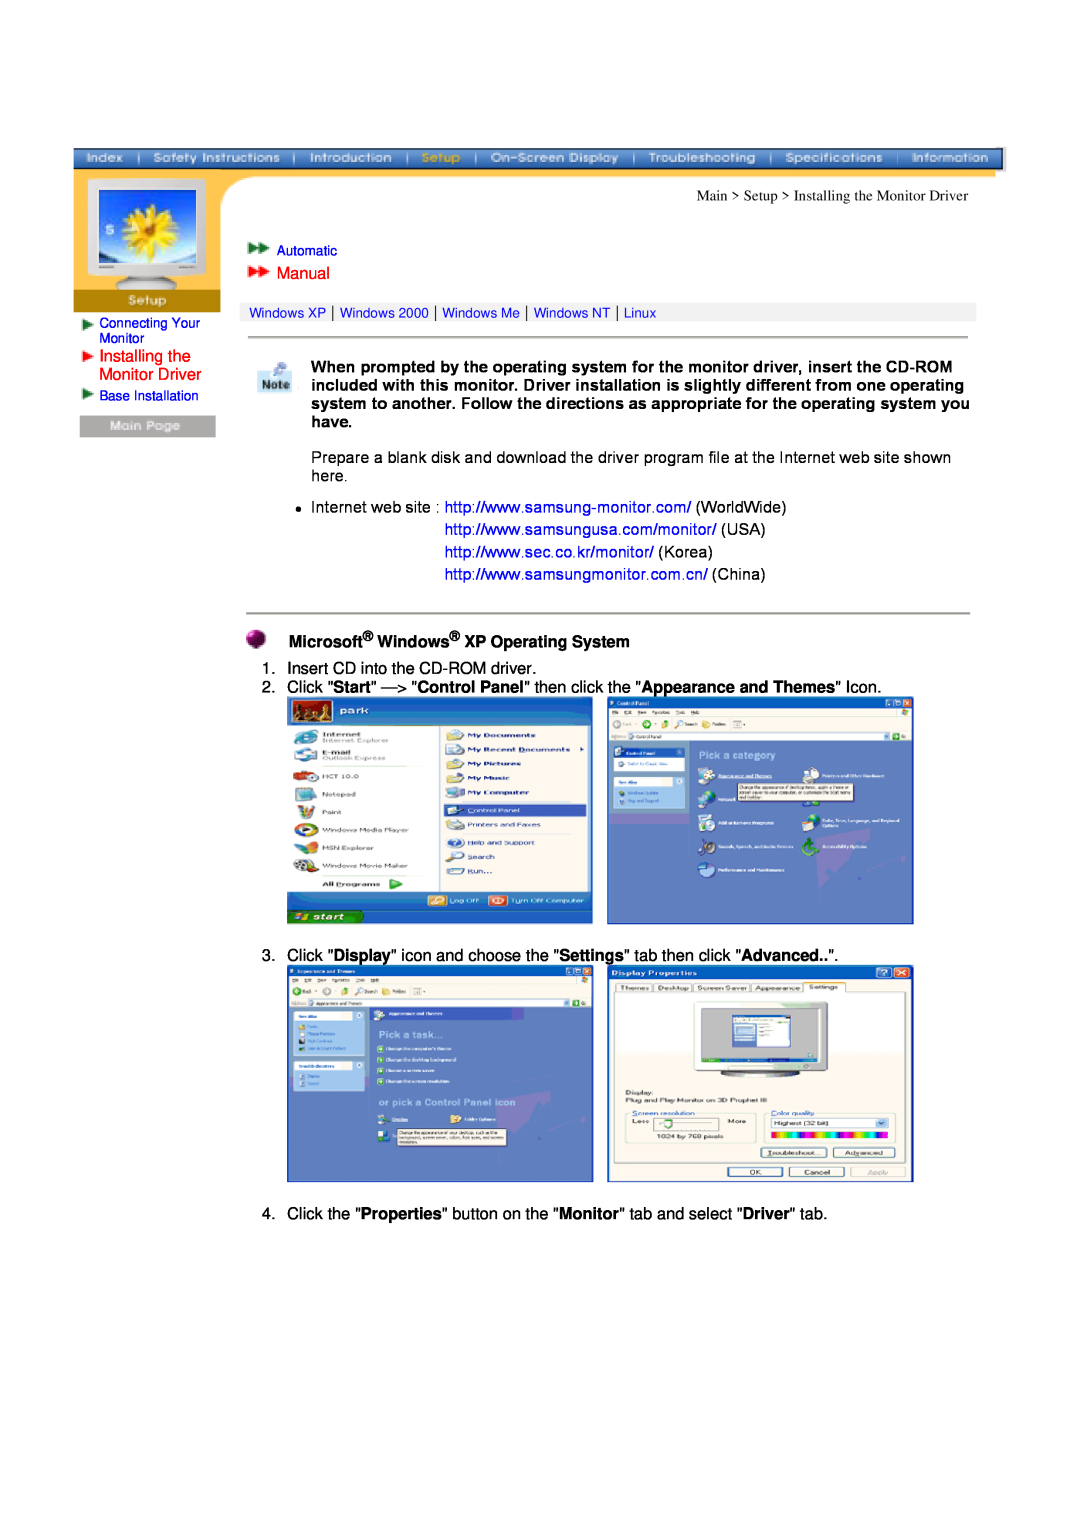 Samsung 957D manual Installing the Monitor Driver, Manual, Microsoft Windows XP Operating System 